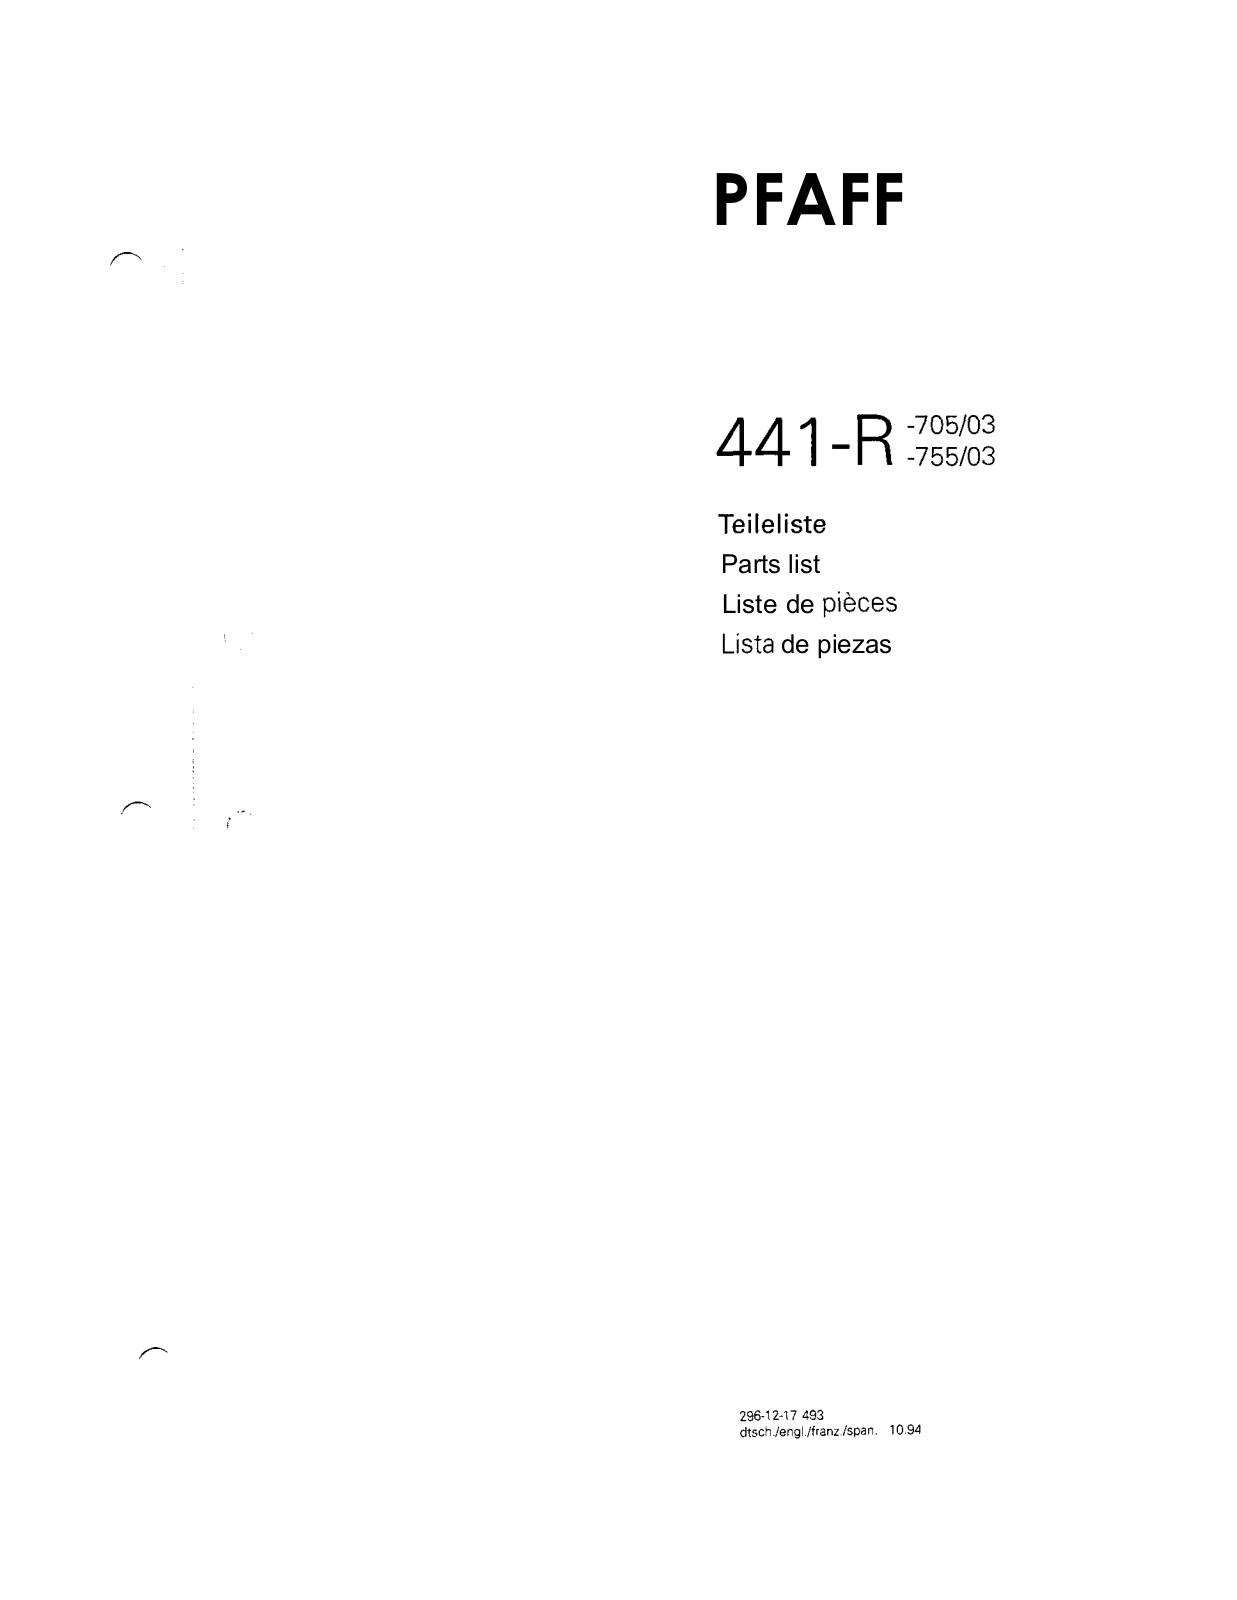 Pfaff 441-R-705/03, 441-R-755/03 Parts List